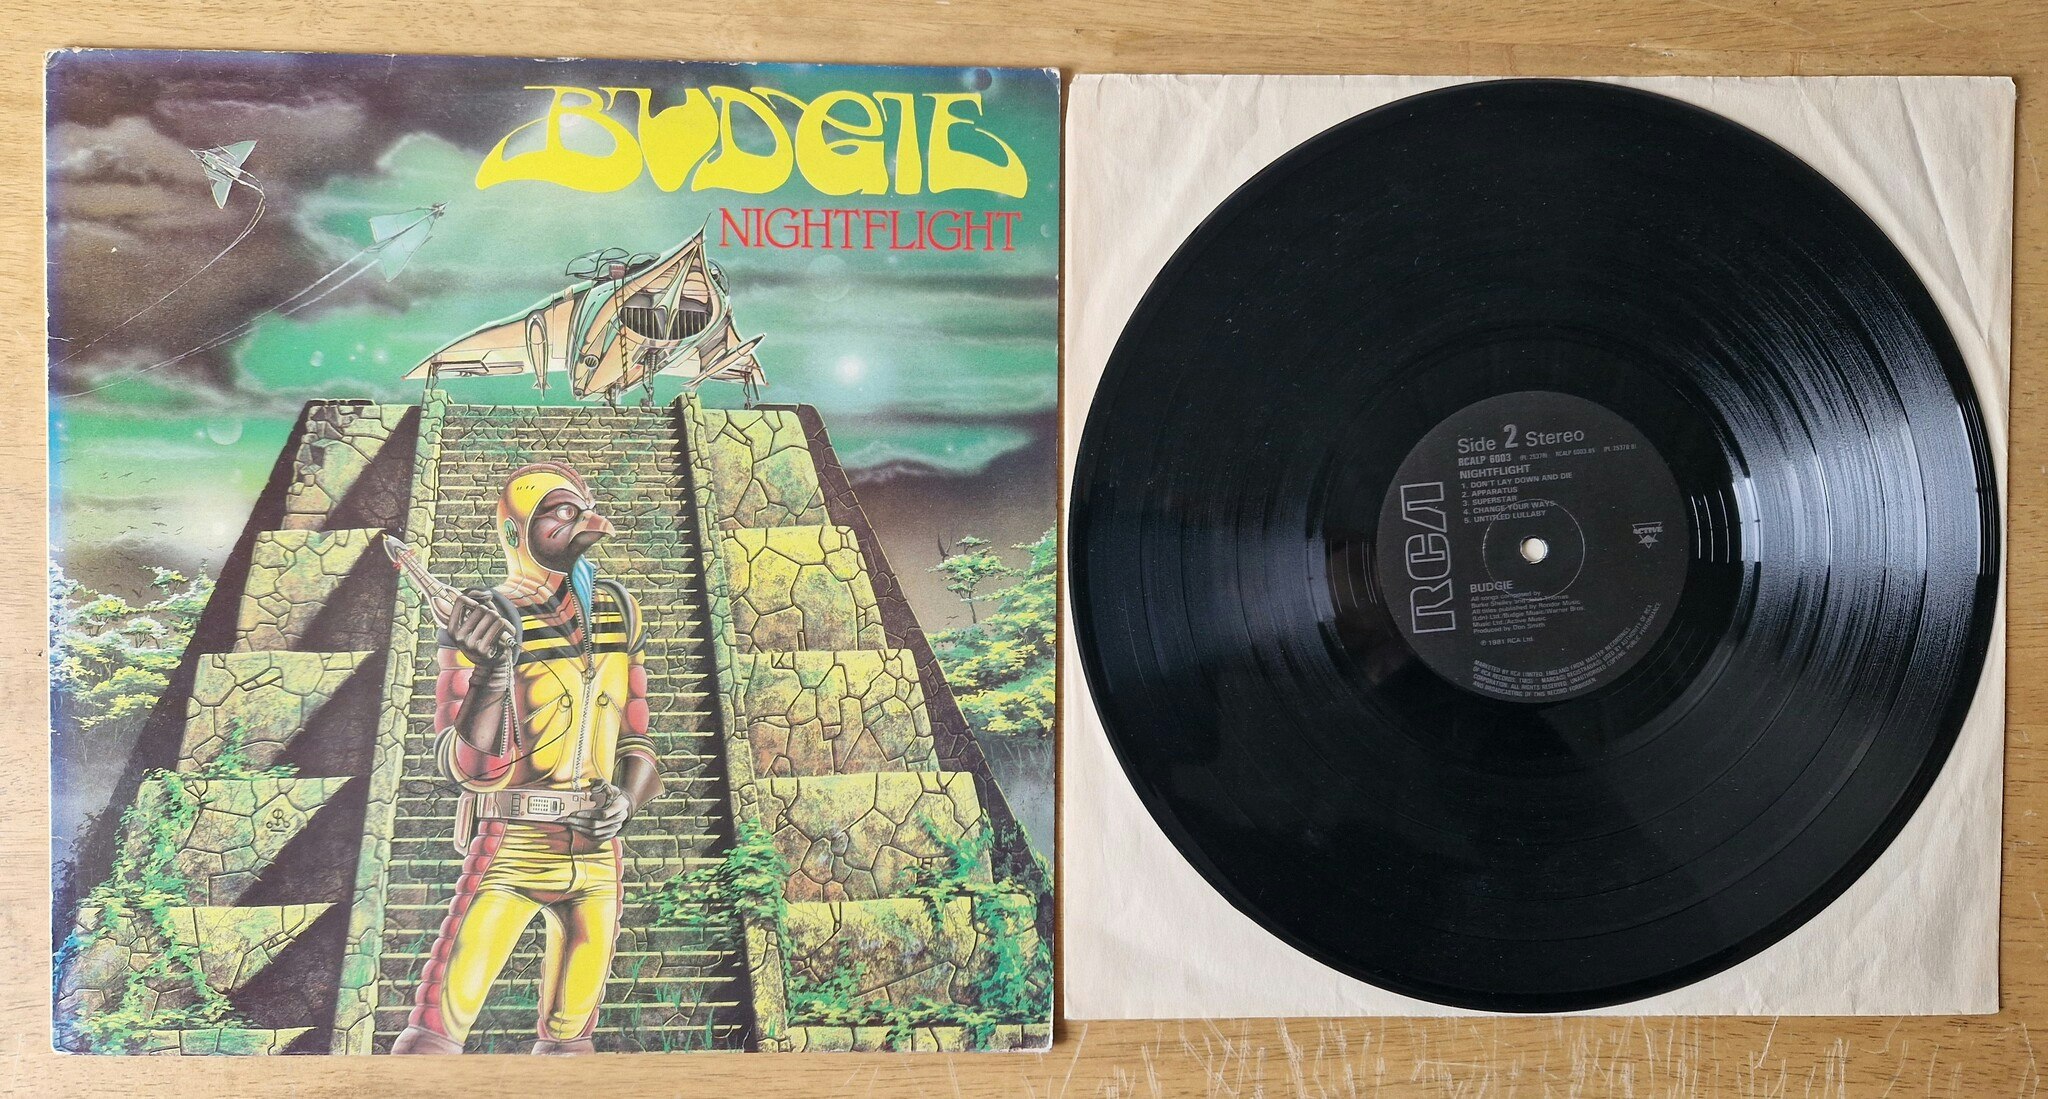 Budgie, Nightflight. Vinyl LP